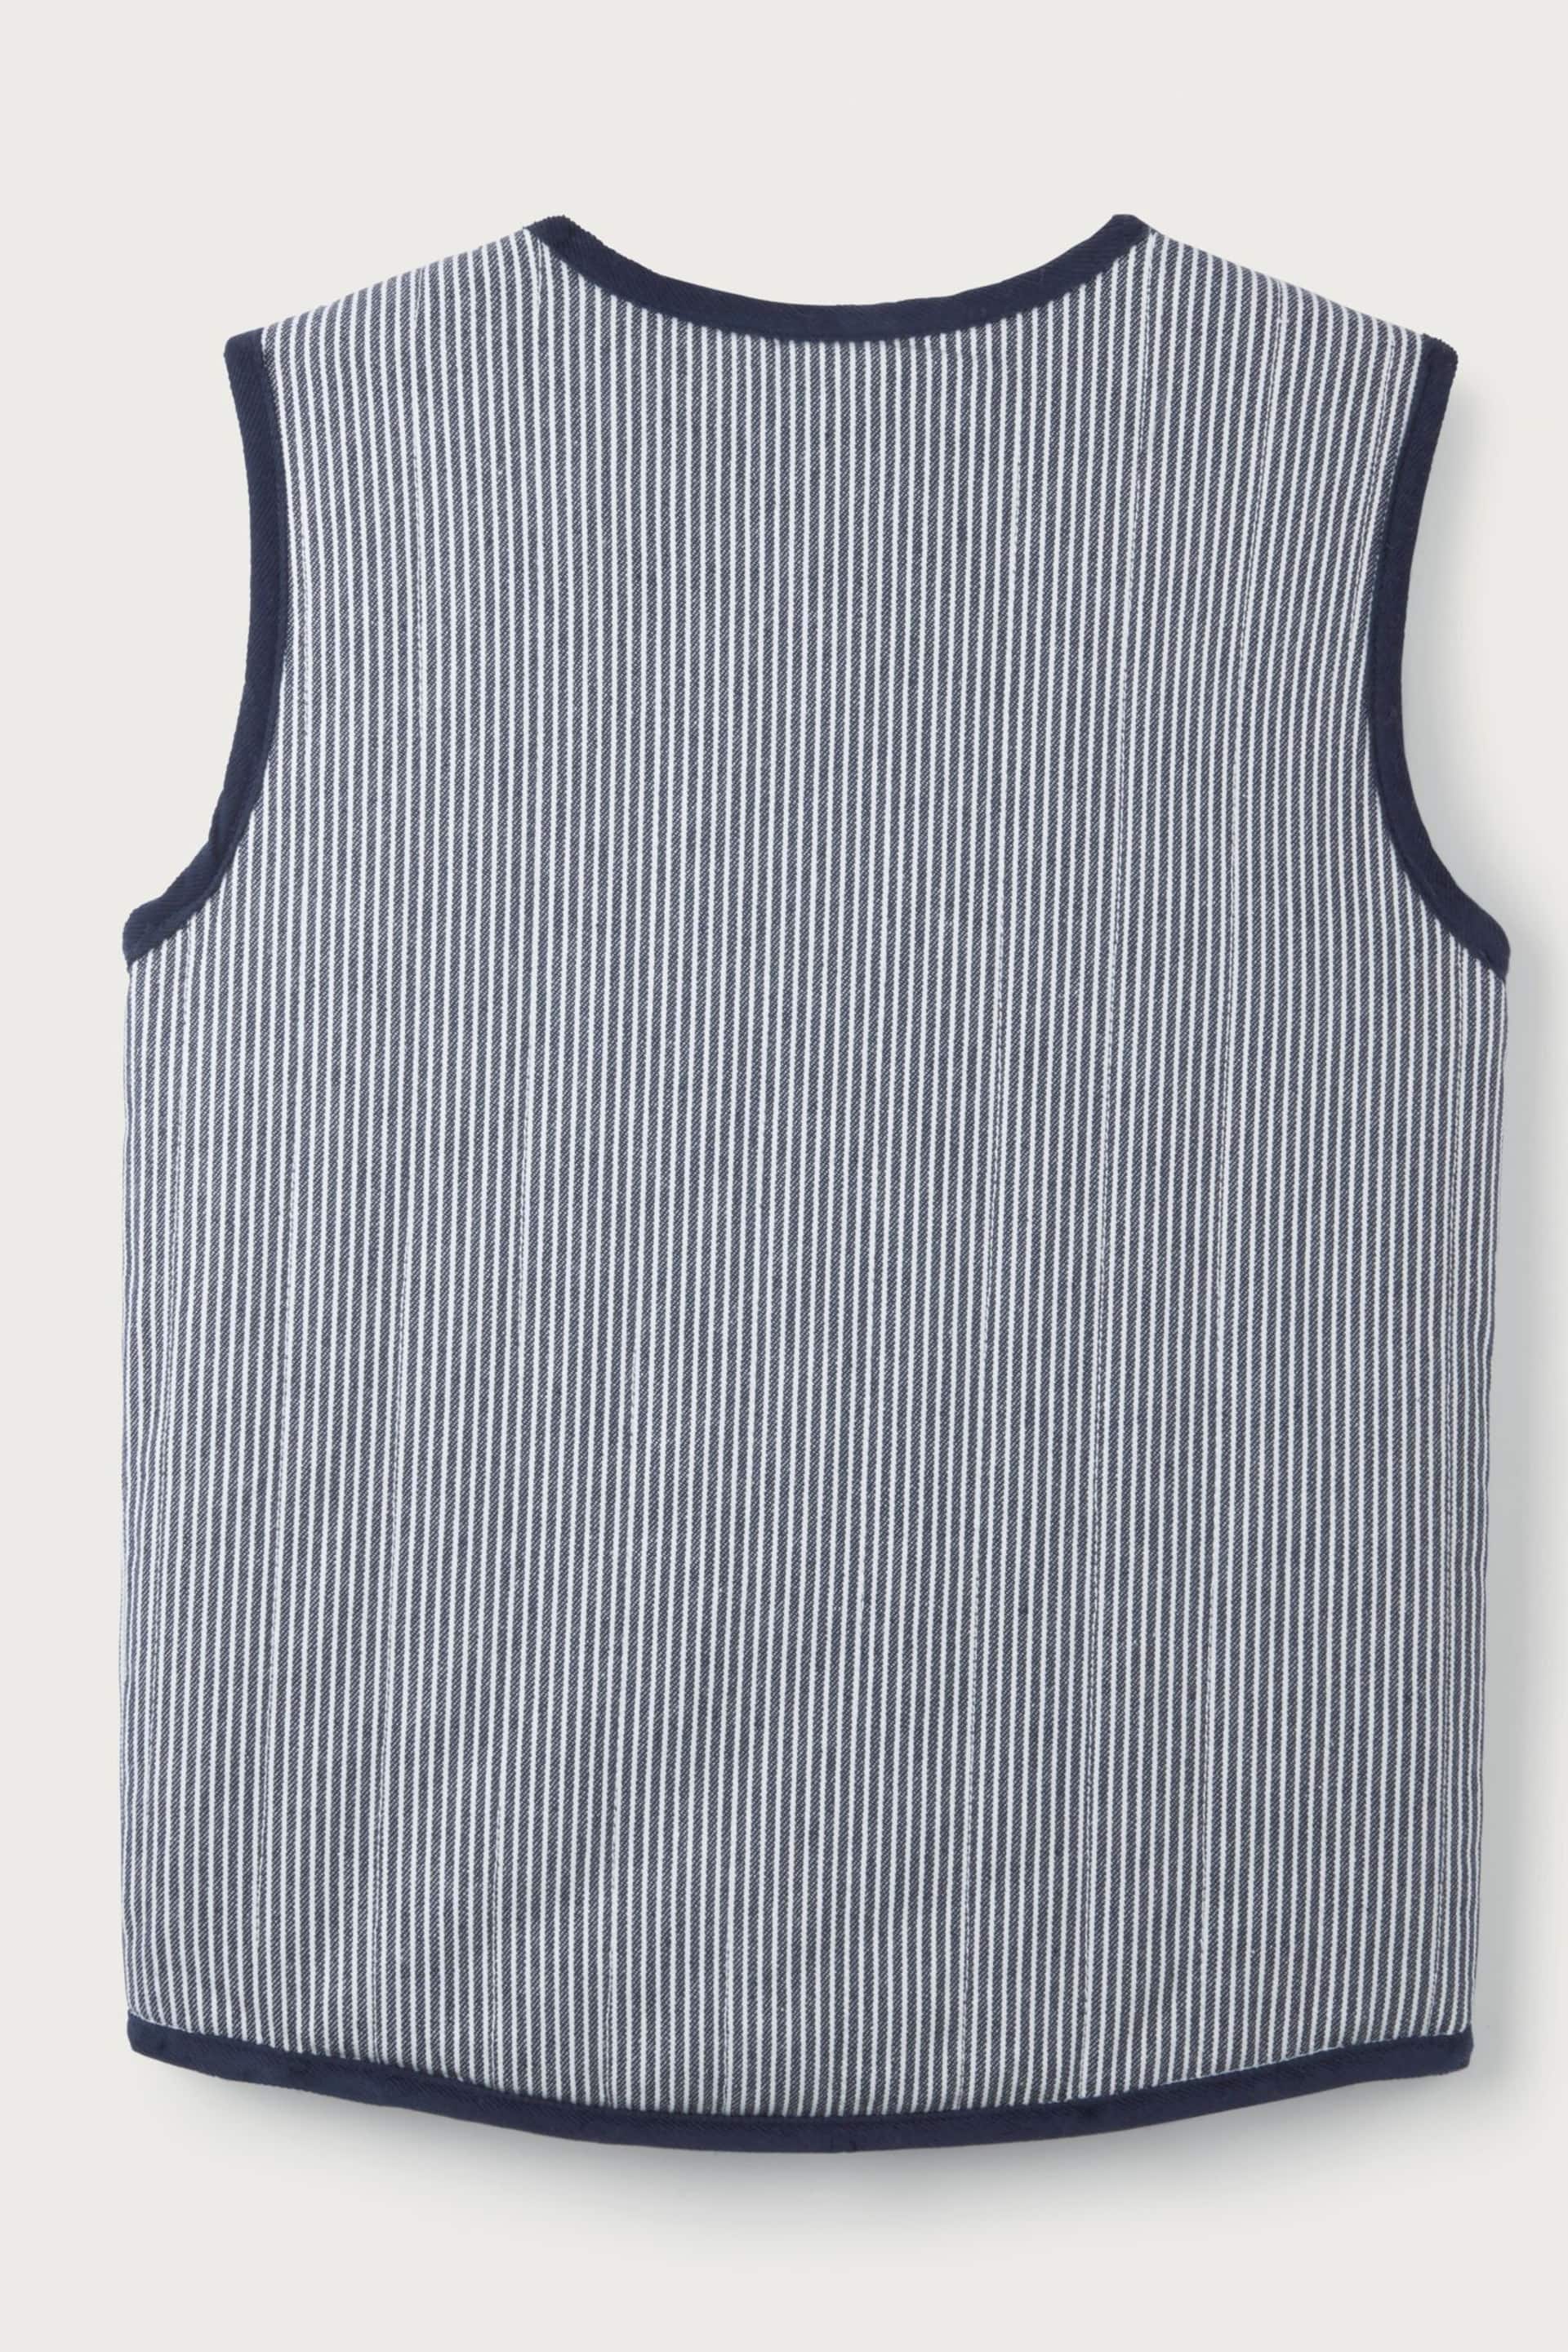 The White Company Blue Organic Cotton Stripe Twill Gilet - Image 8 of 8